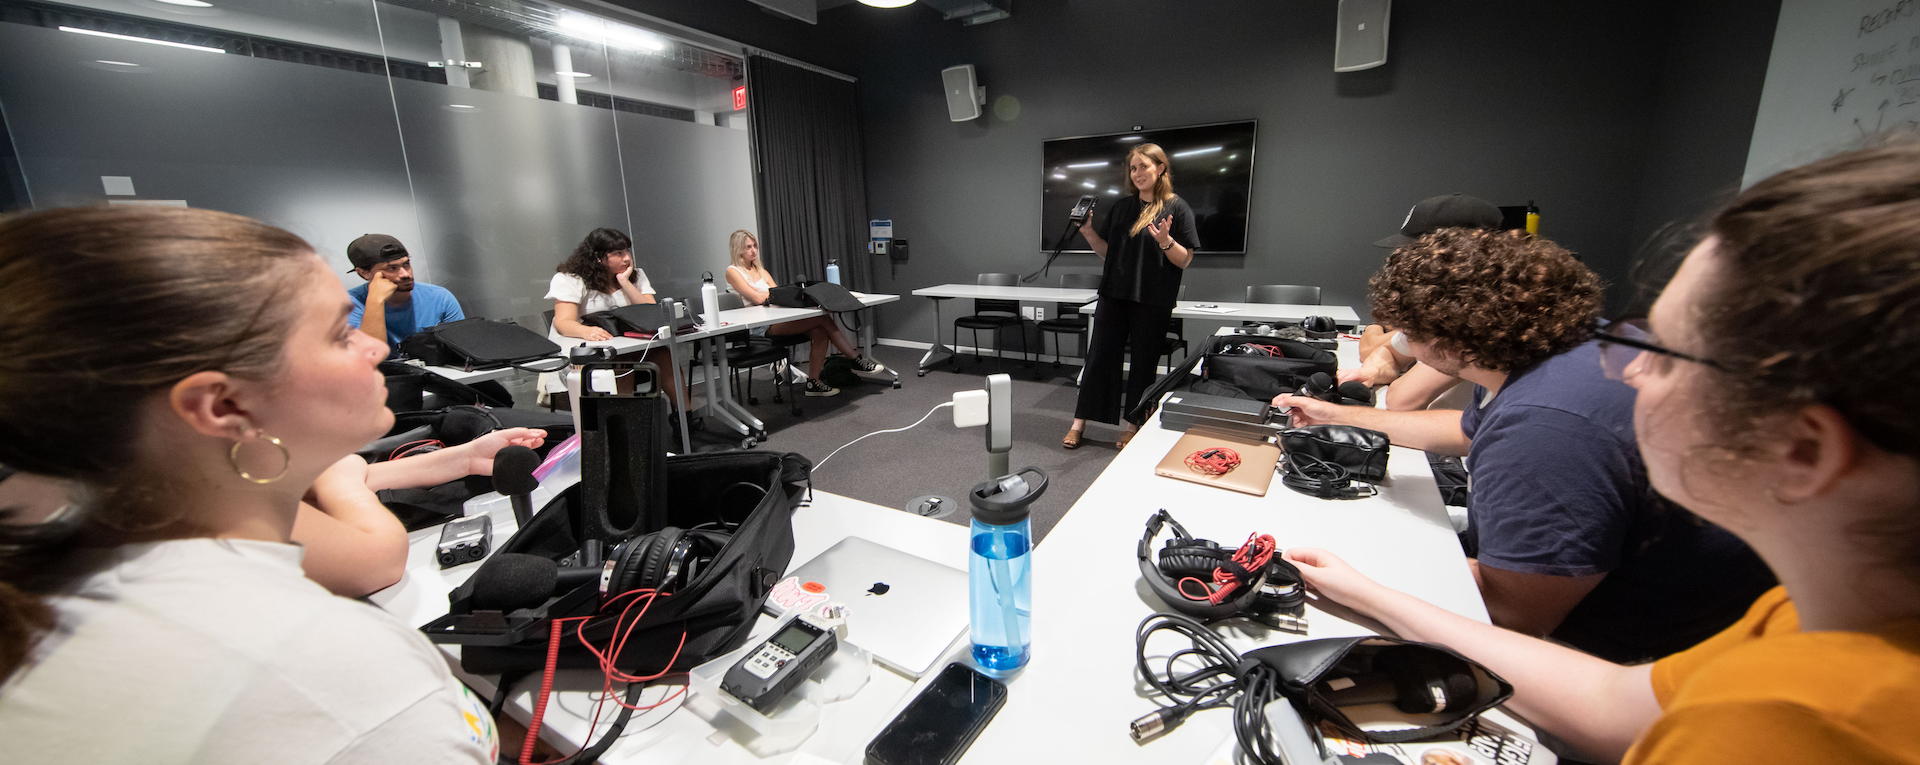 Students in audio journalism classroom